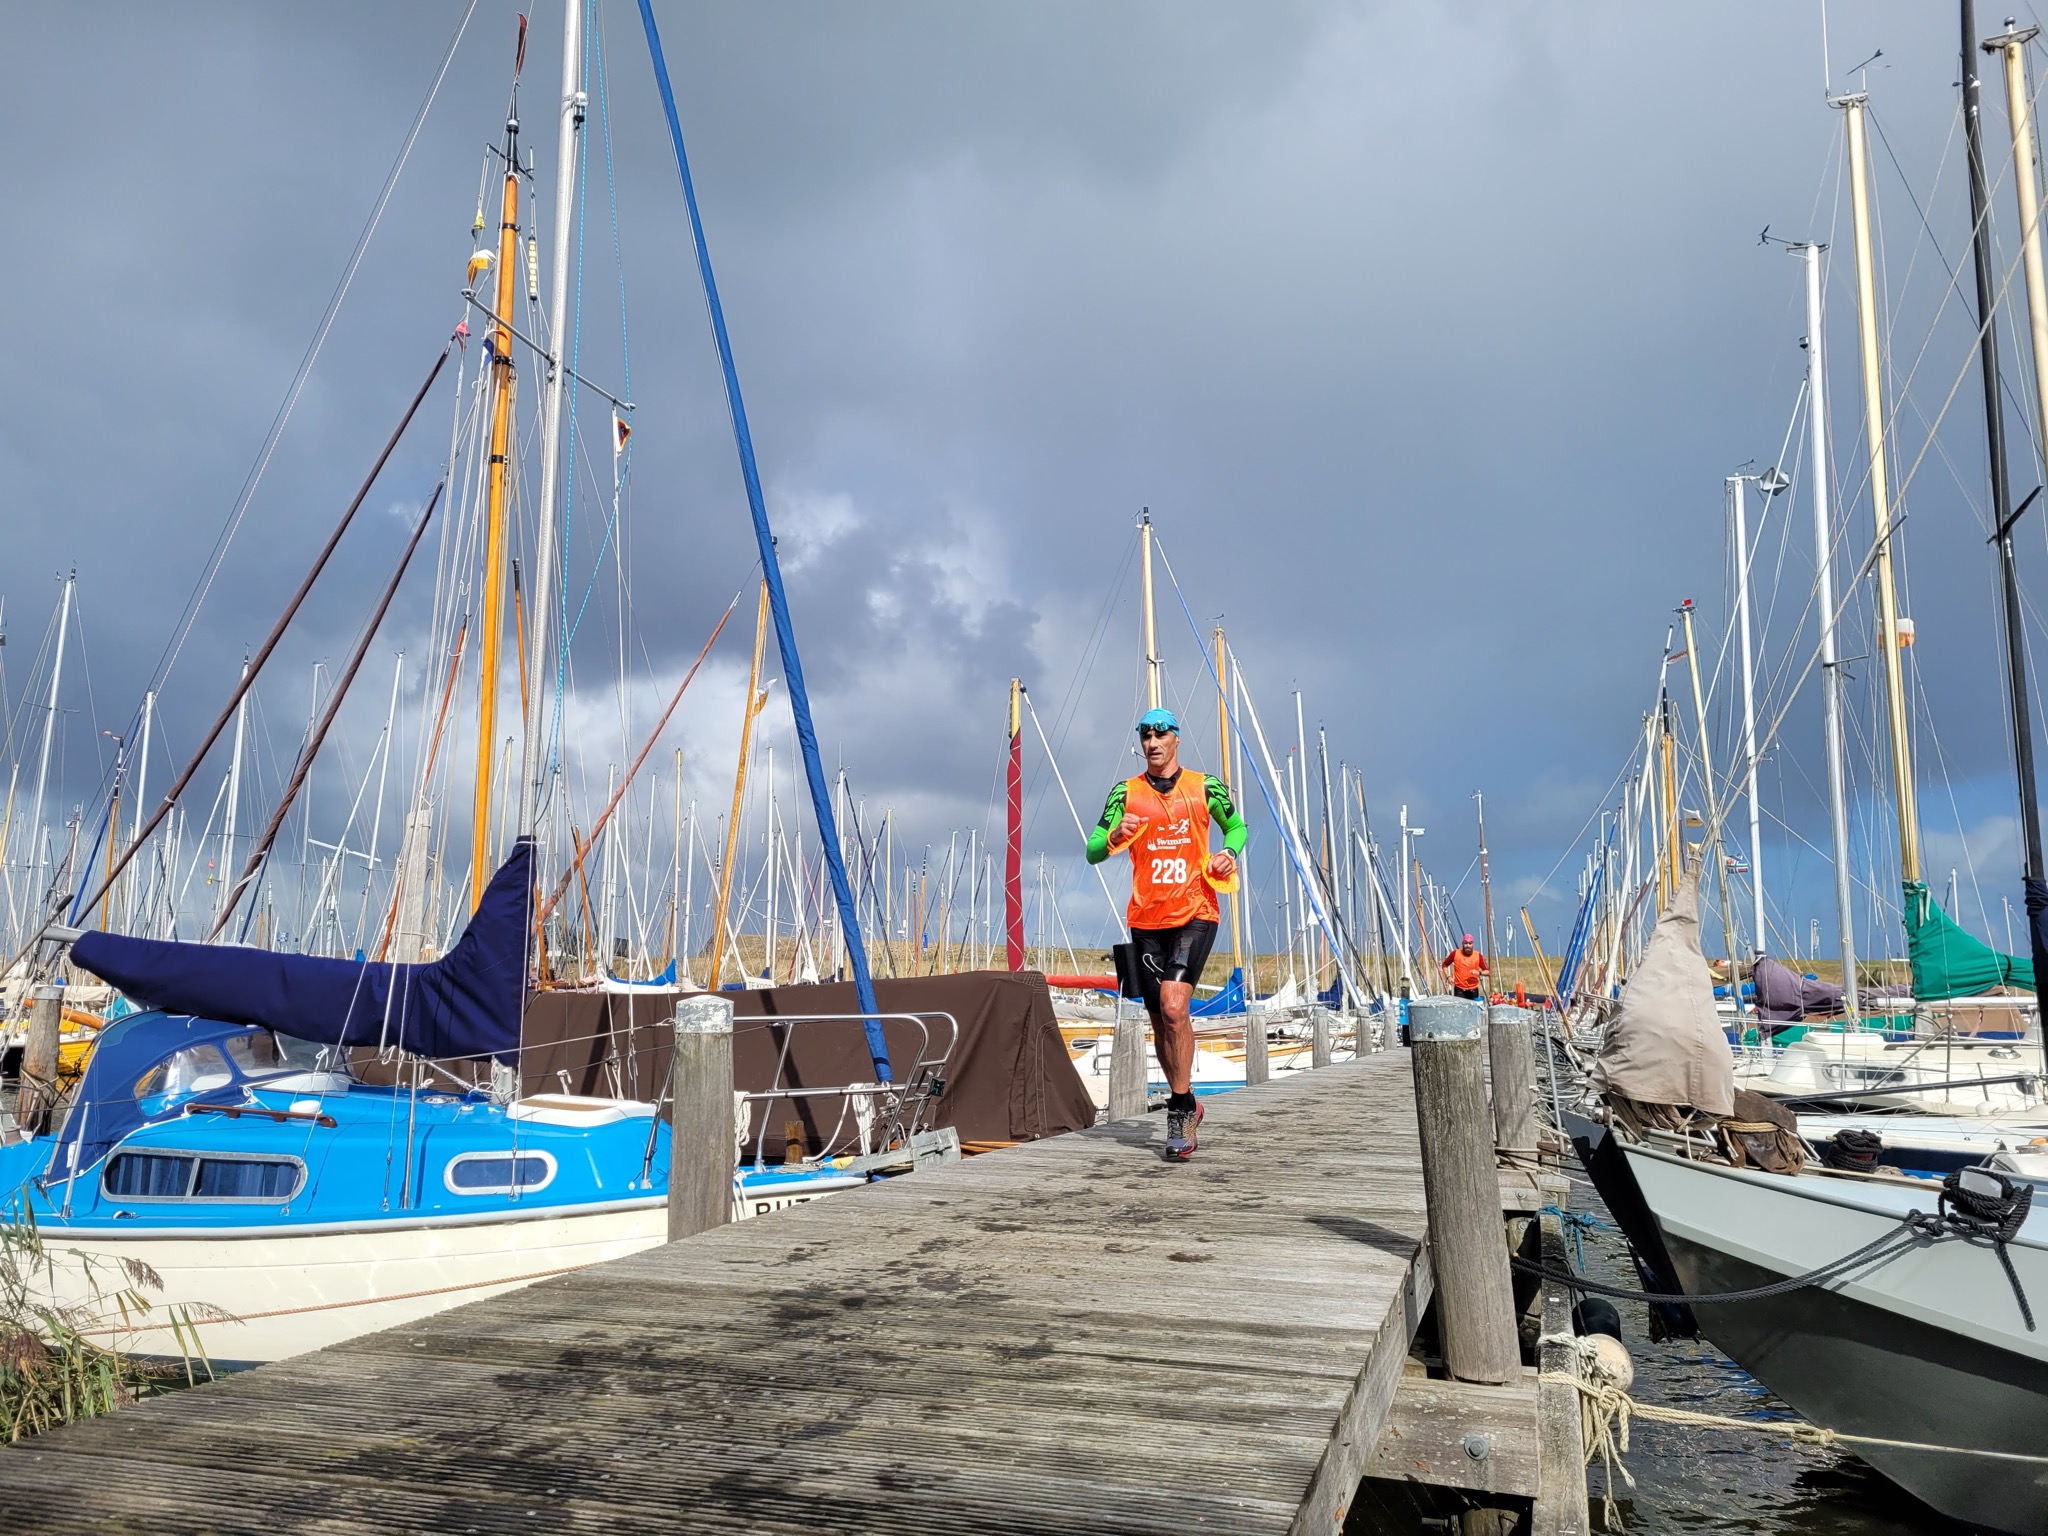 The first real swimrun - Lauwersmeer Swimrun 2022